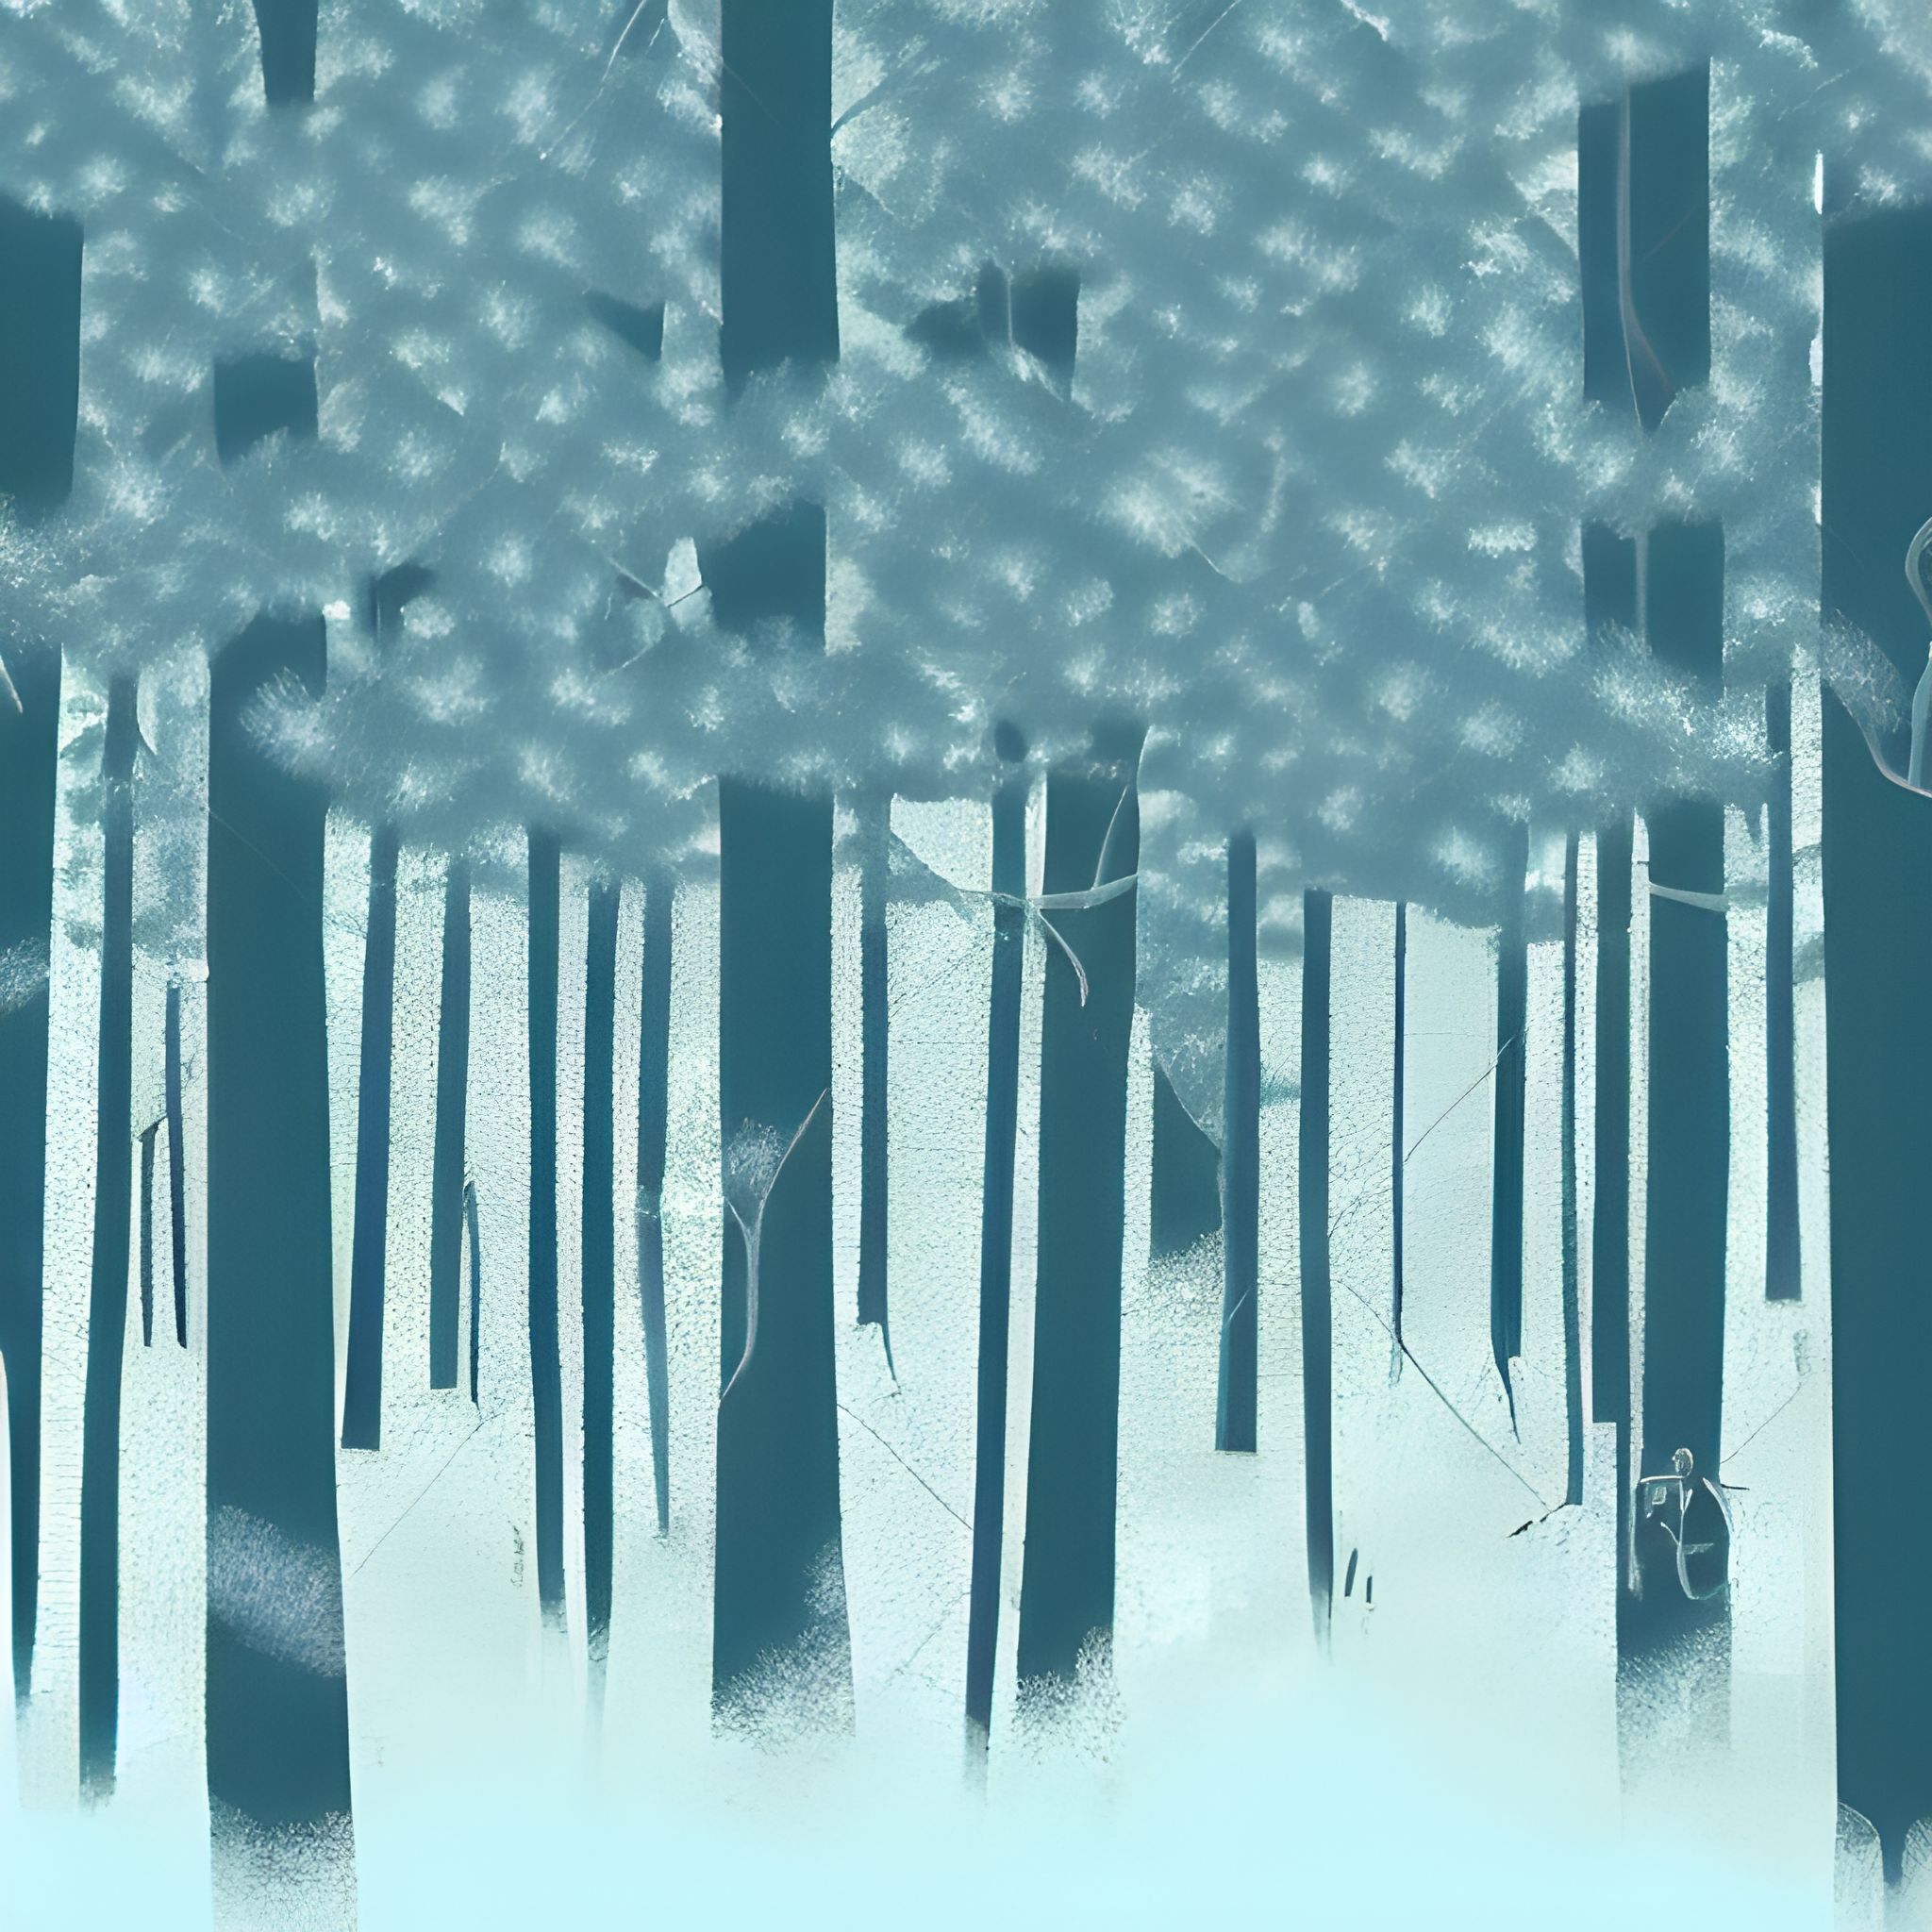 Minimalistic illustration landscape winter forest  human figure in it 1668453180442